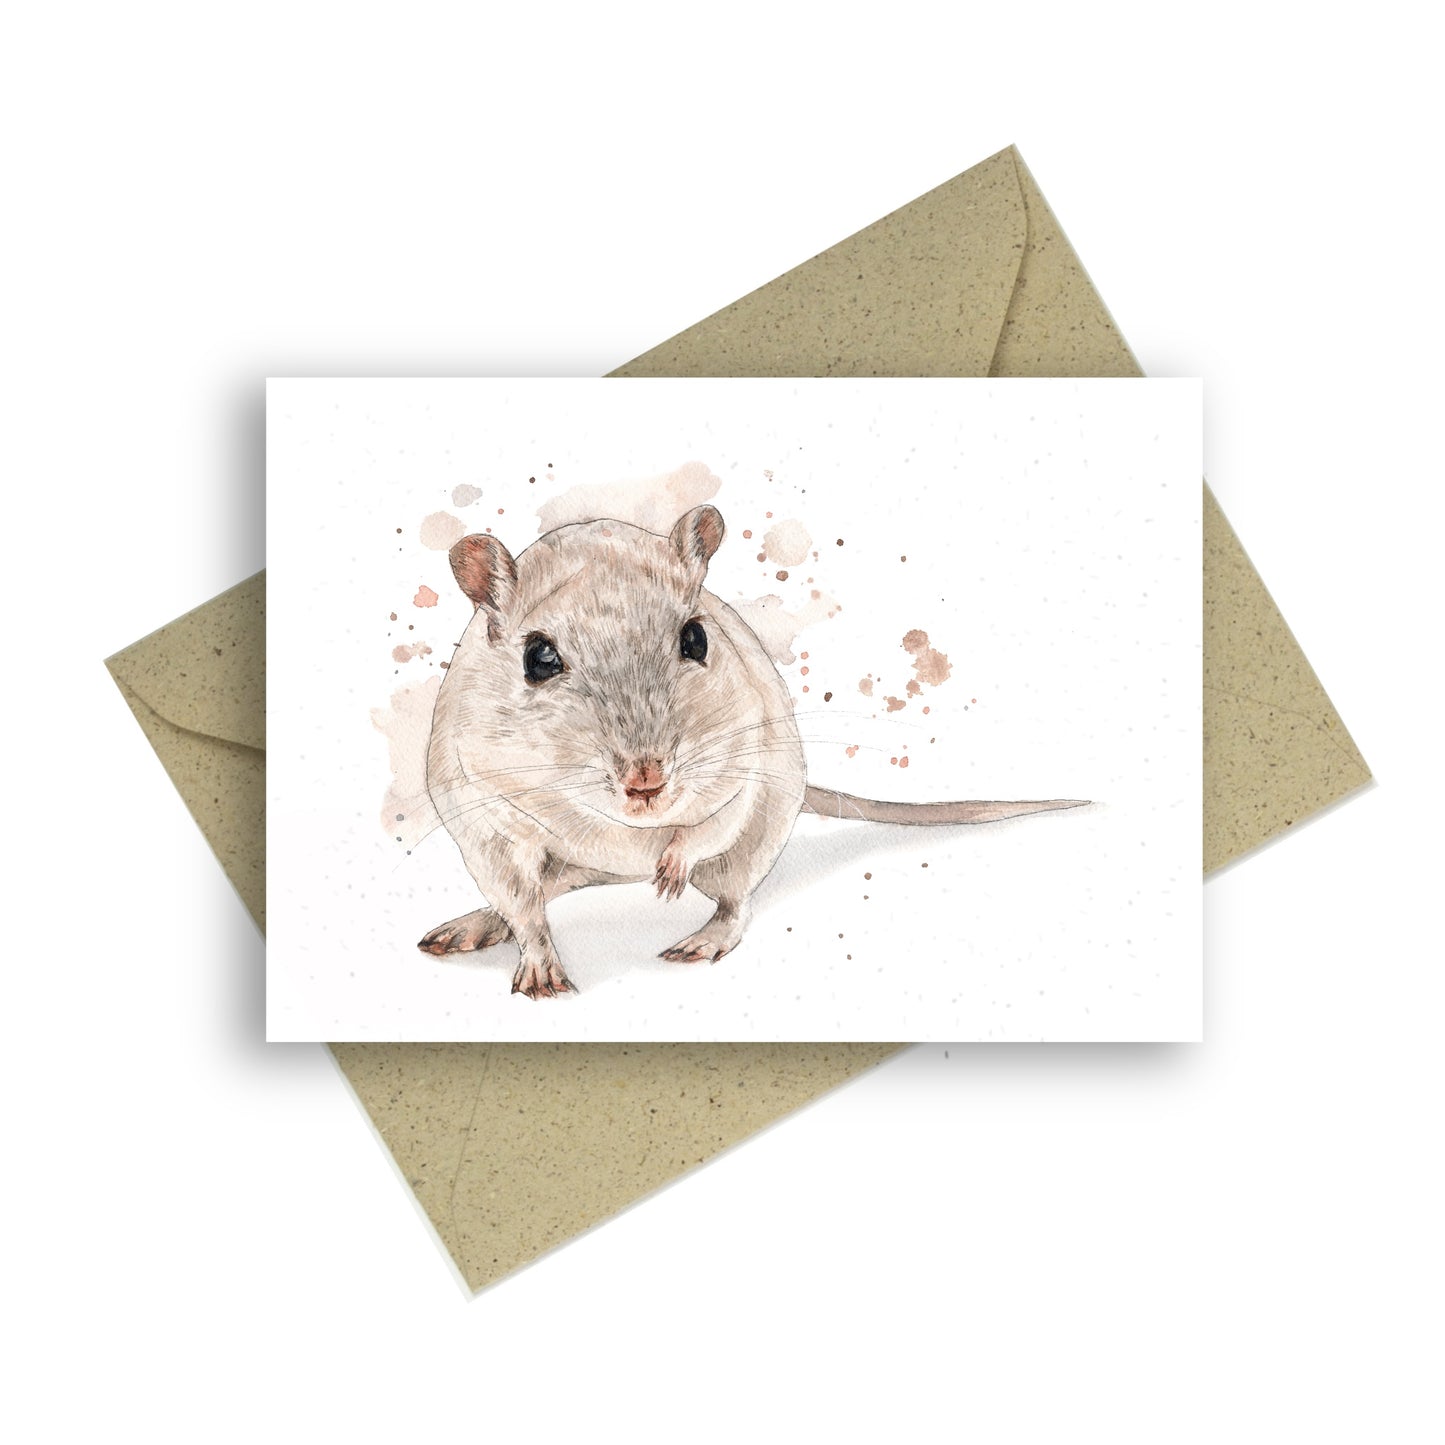 Greeting card “Rat”